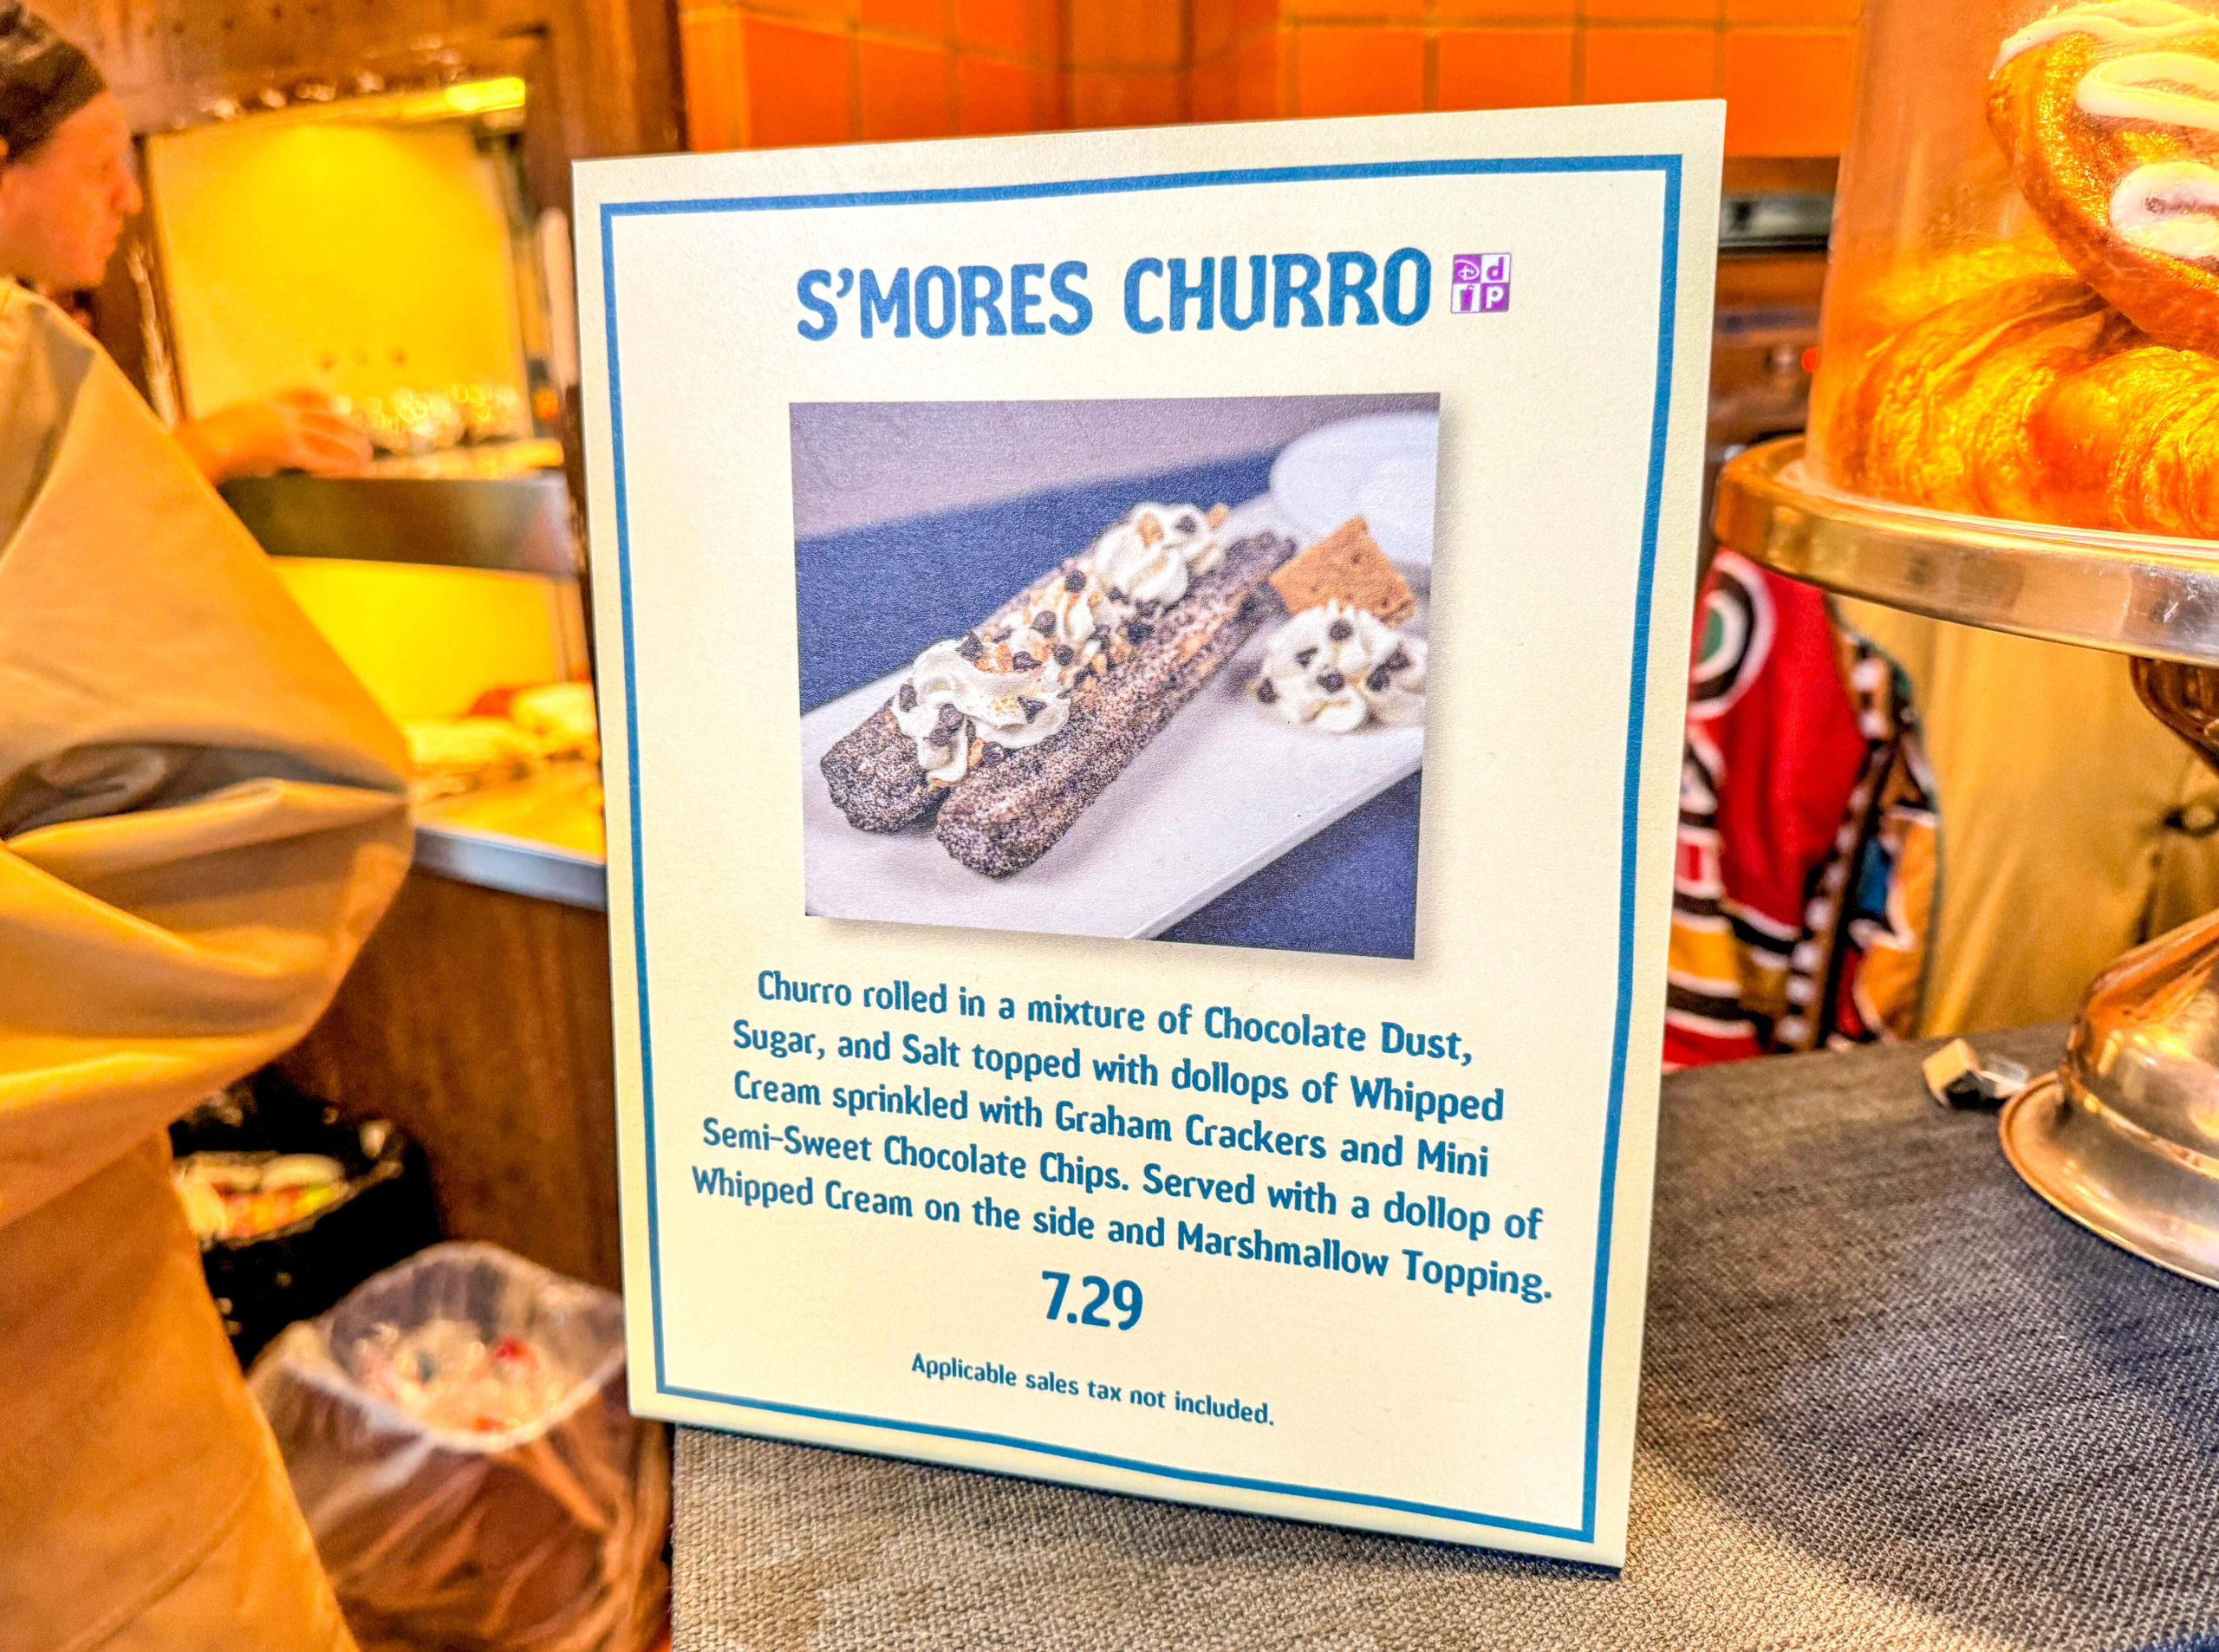 S'mores Churro